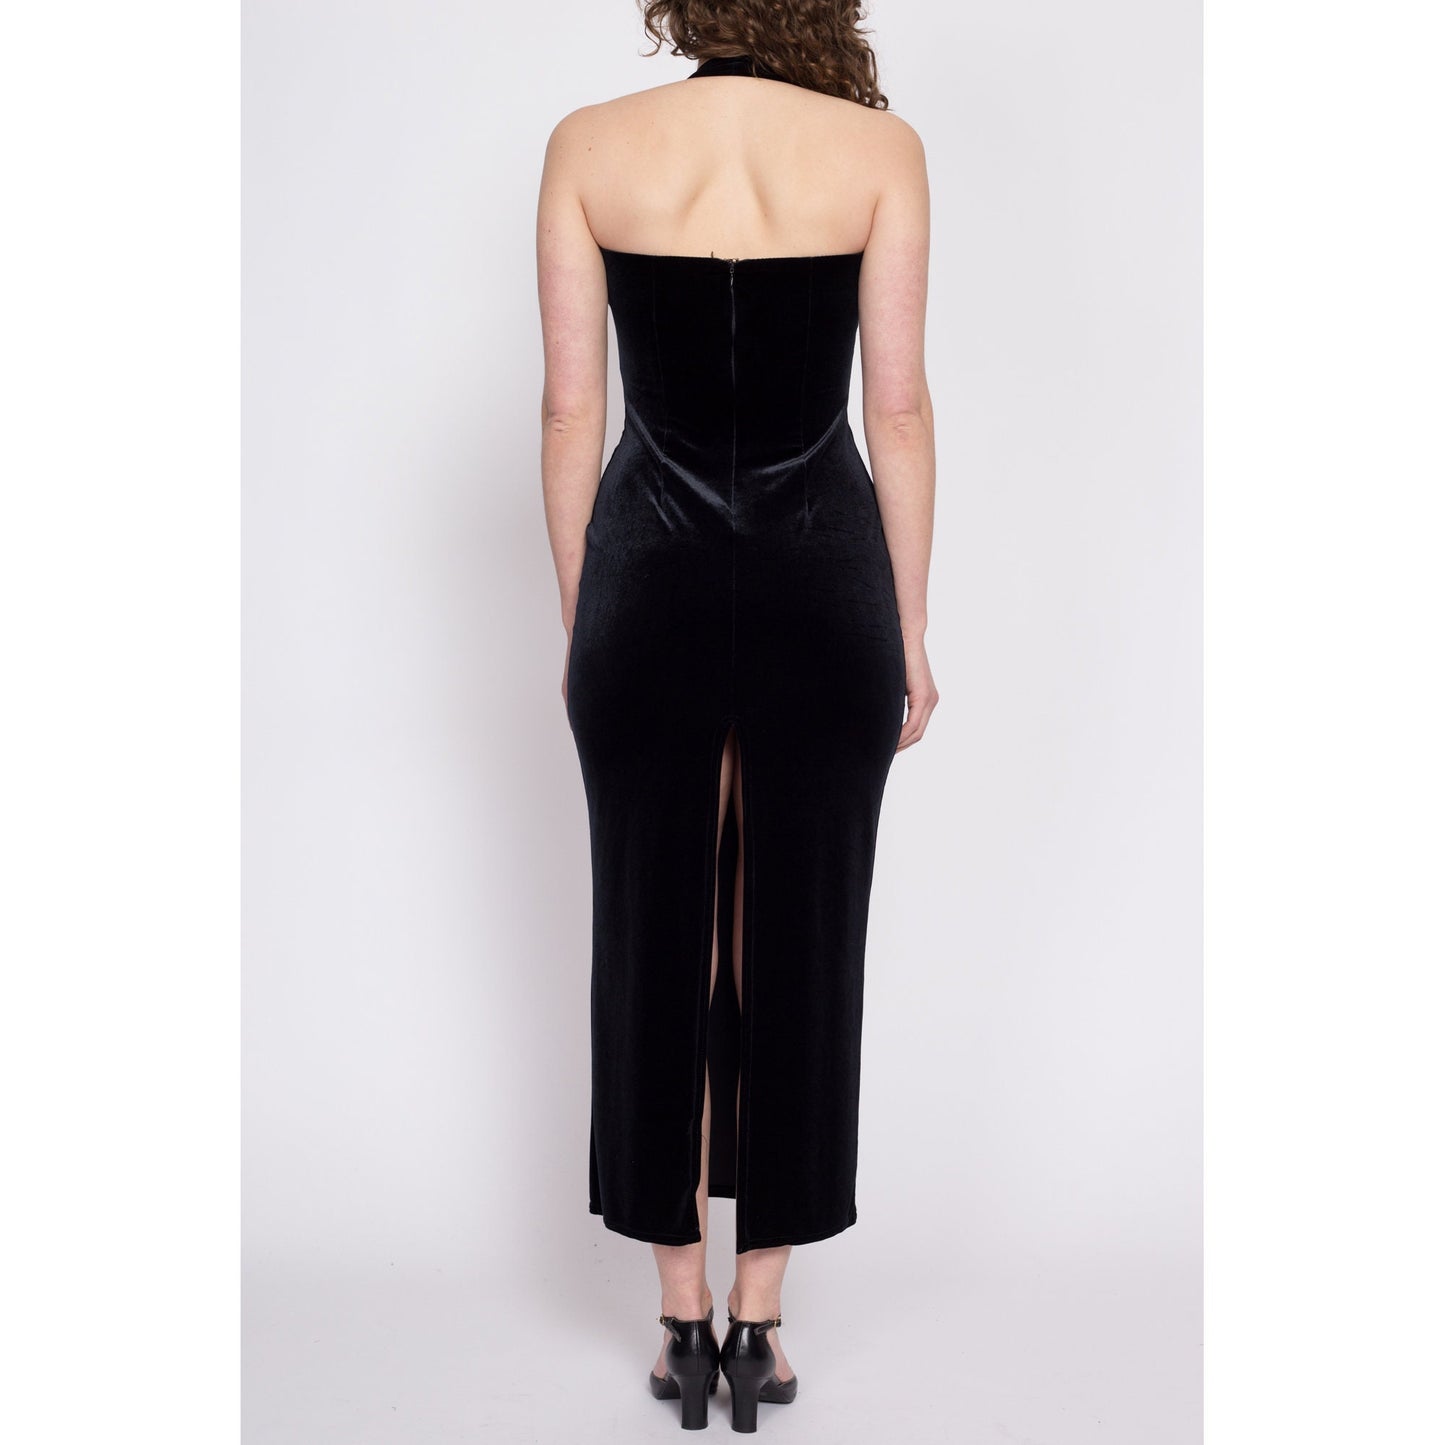 90s Y2K Sparkle Gradient Black Velvet Bodycon Dress - XS to Small | Vintage Scott McClintock Halter Gown